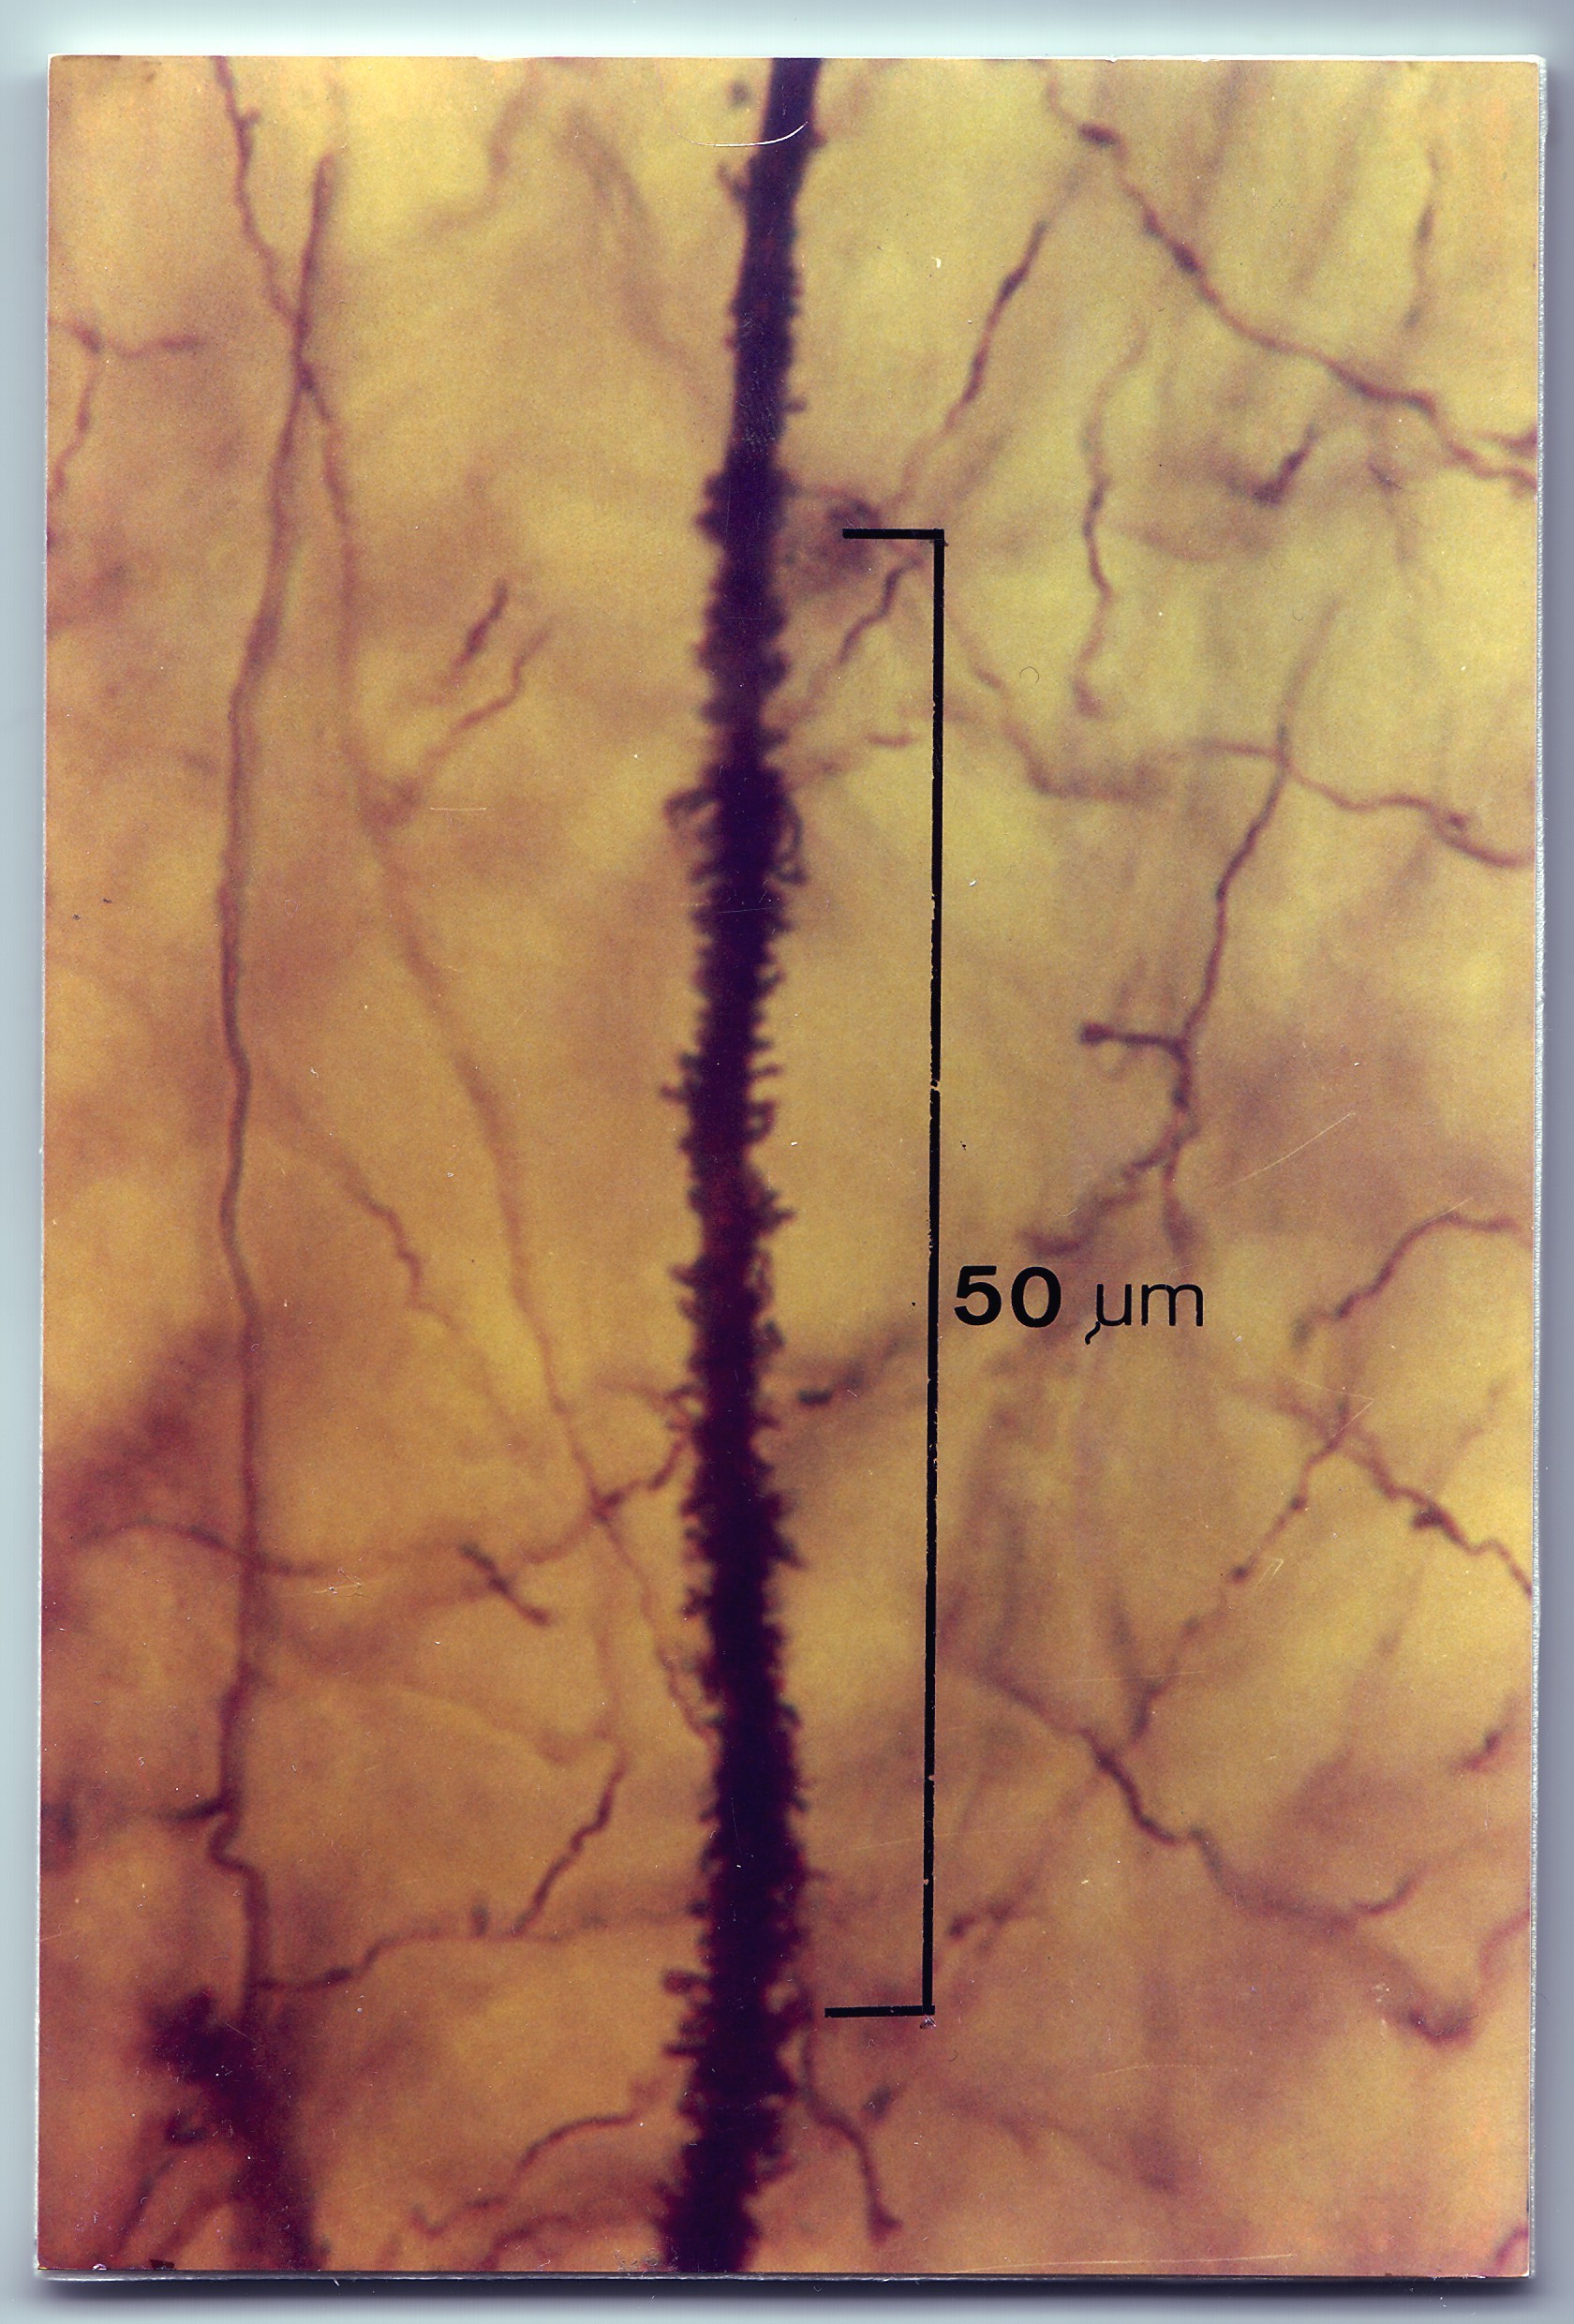 Detalle de la Dendríta Apical de una Neurona Piramidal profunda.